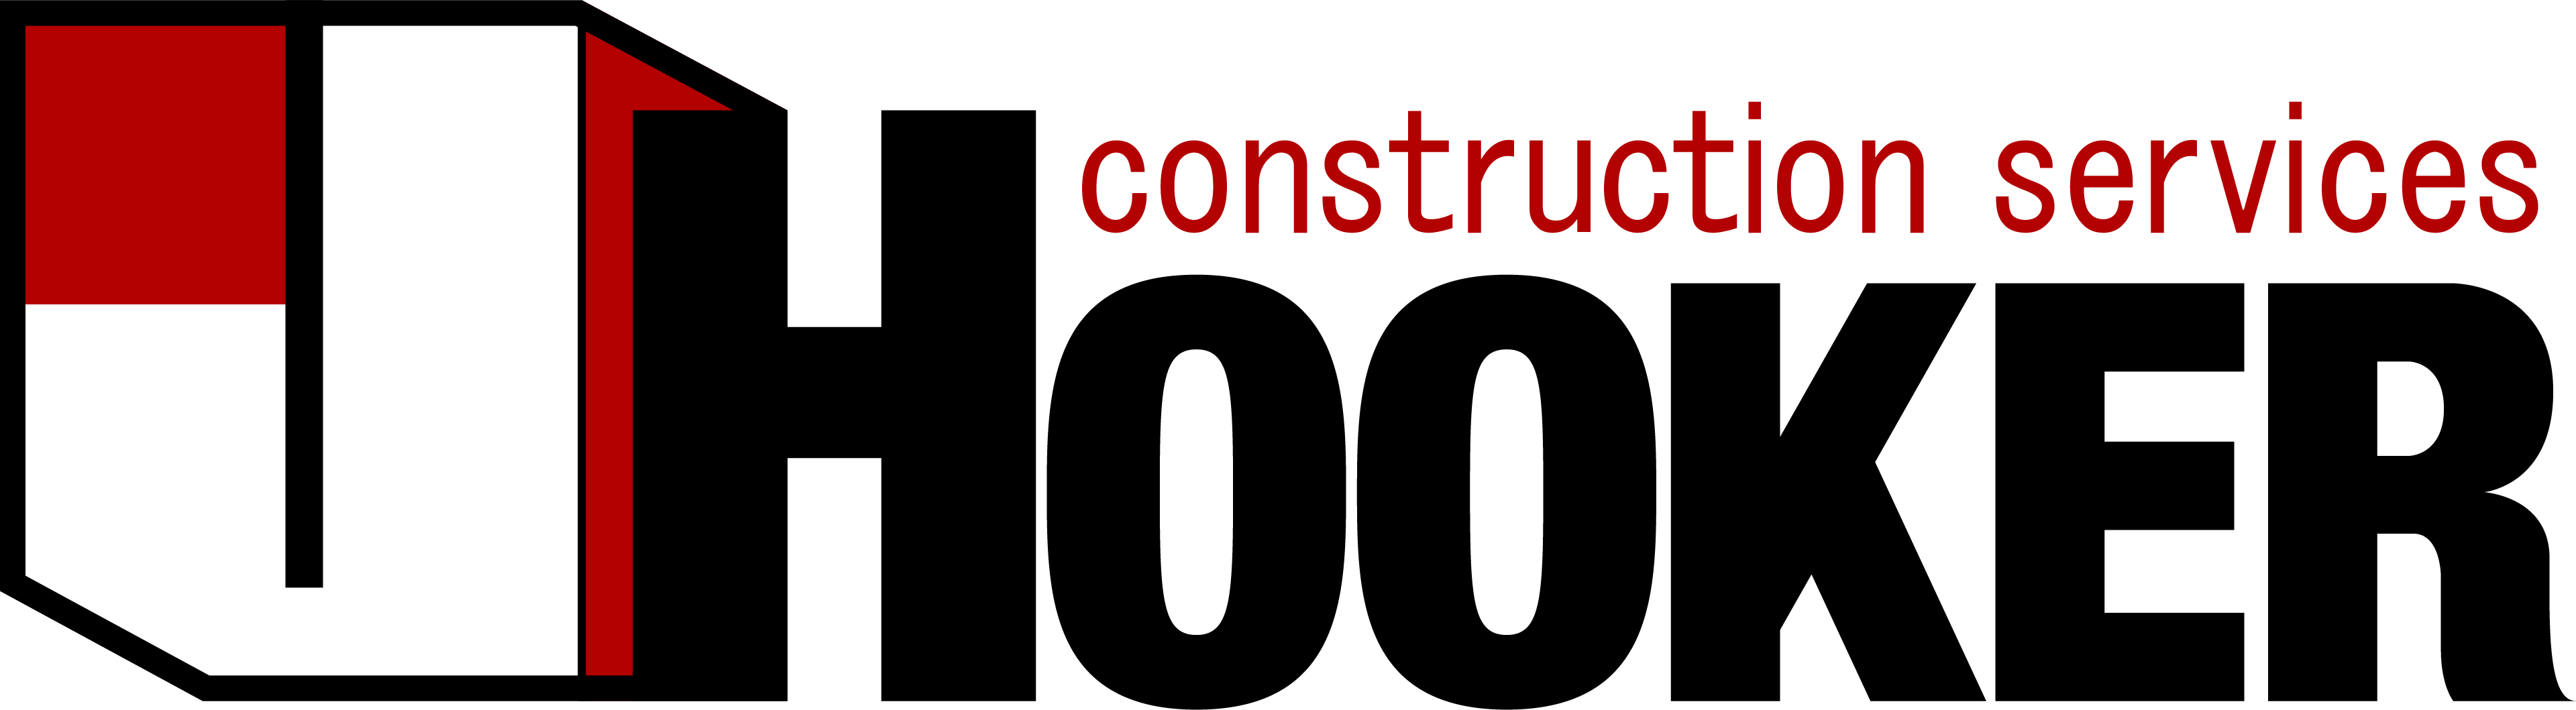 JHooker Construction Services